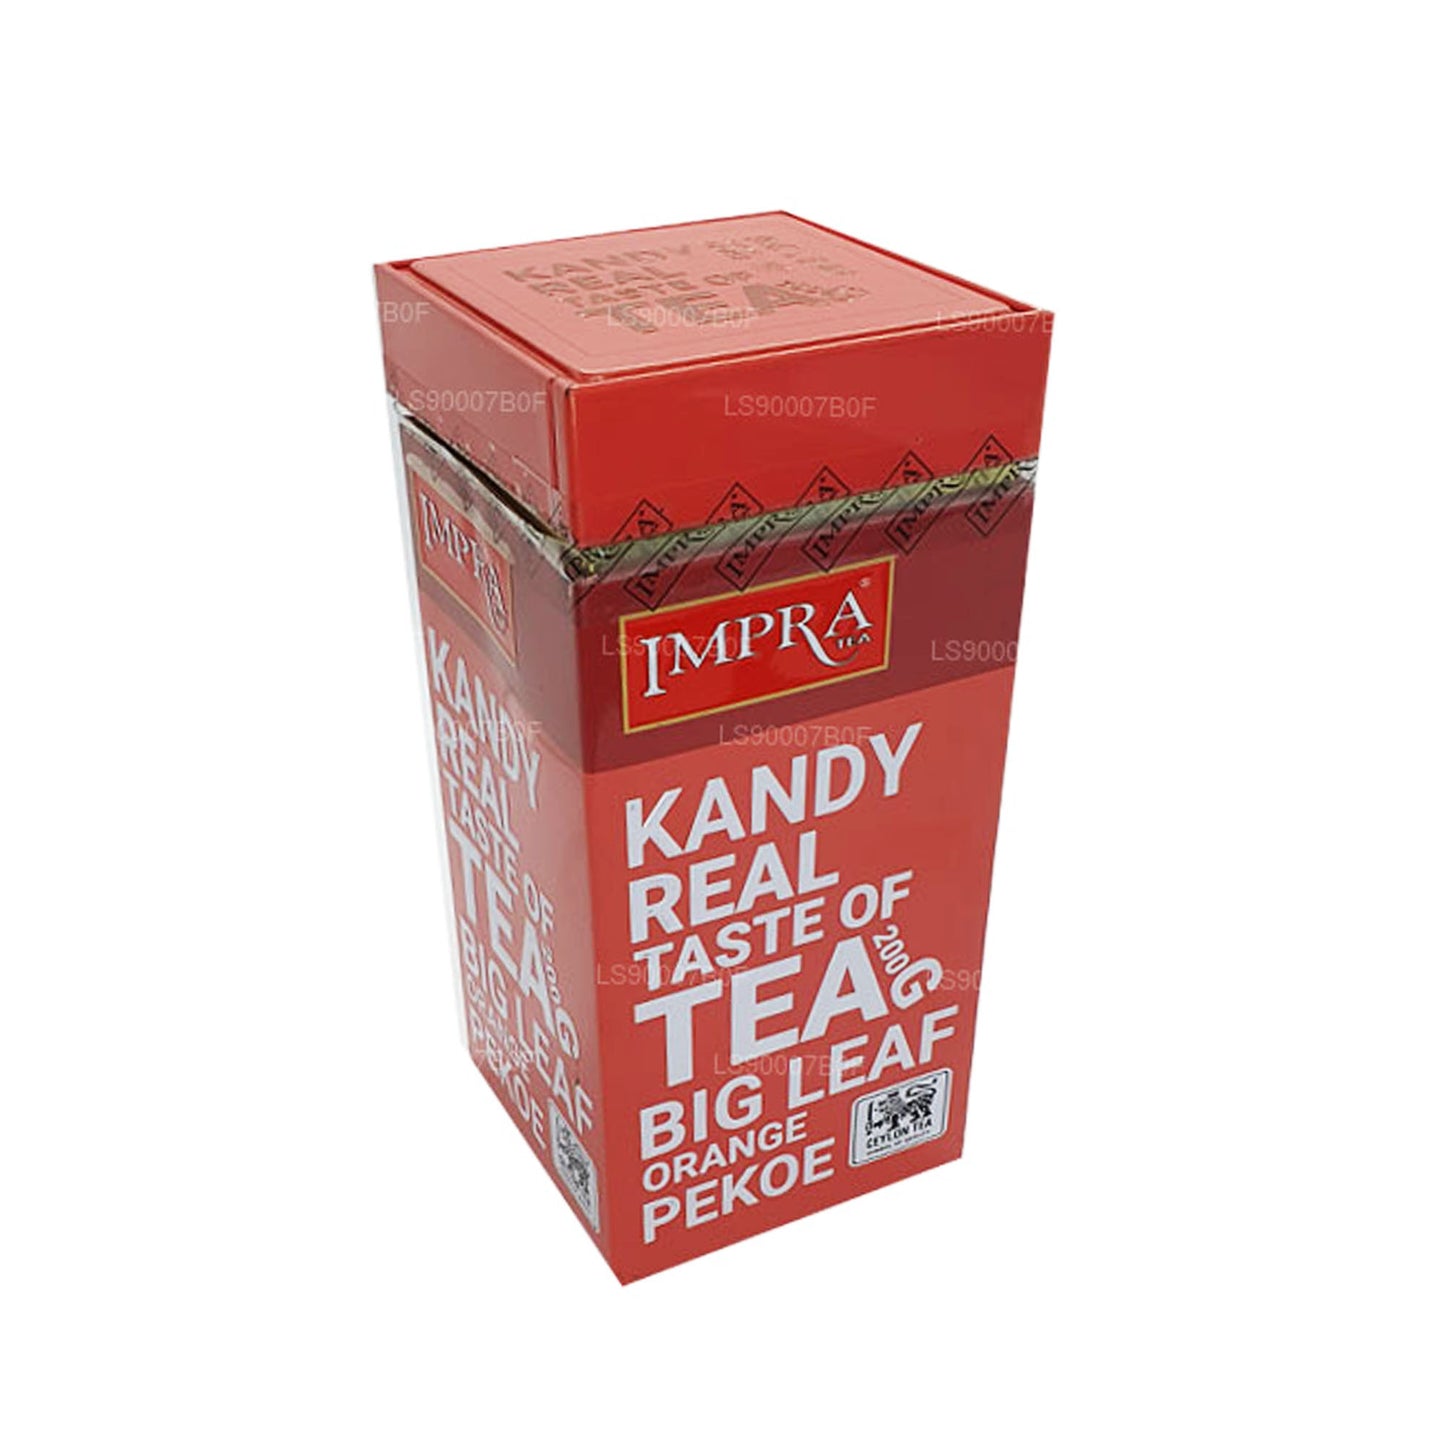 Impra Kandy Taste of Tea Big Leaf Orange Pekoe Fleischdose (200 g)